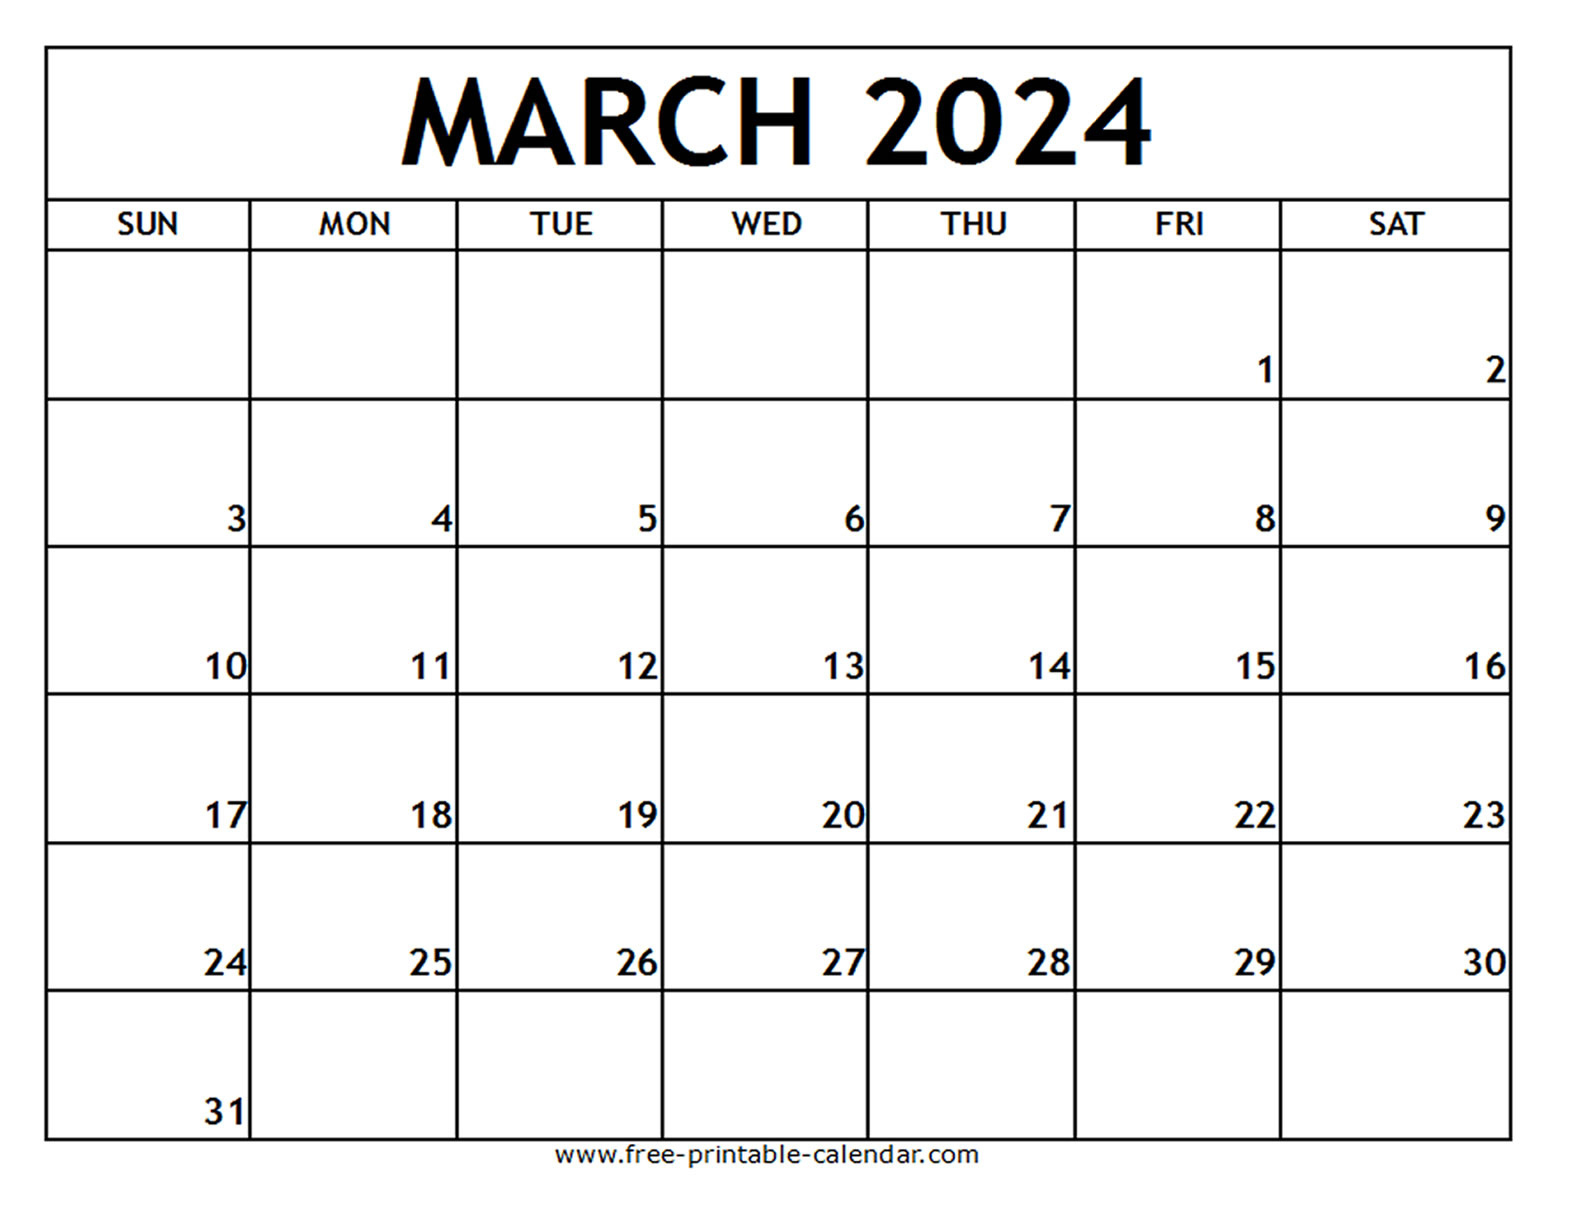 March 2024 Printable Calendar - Free-Printable-Calendar with Free Printable Blank March 2024 Calendar